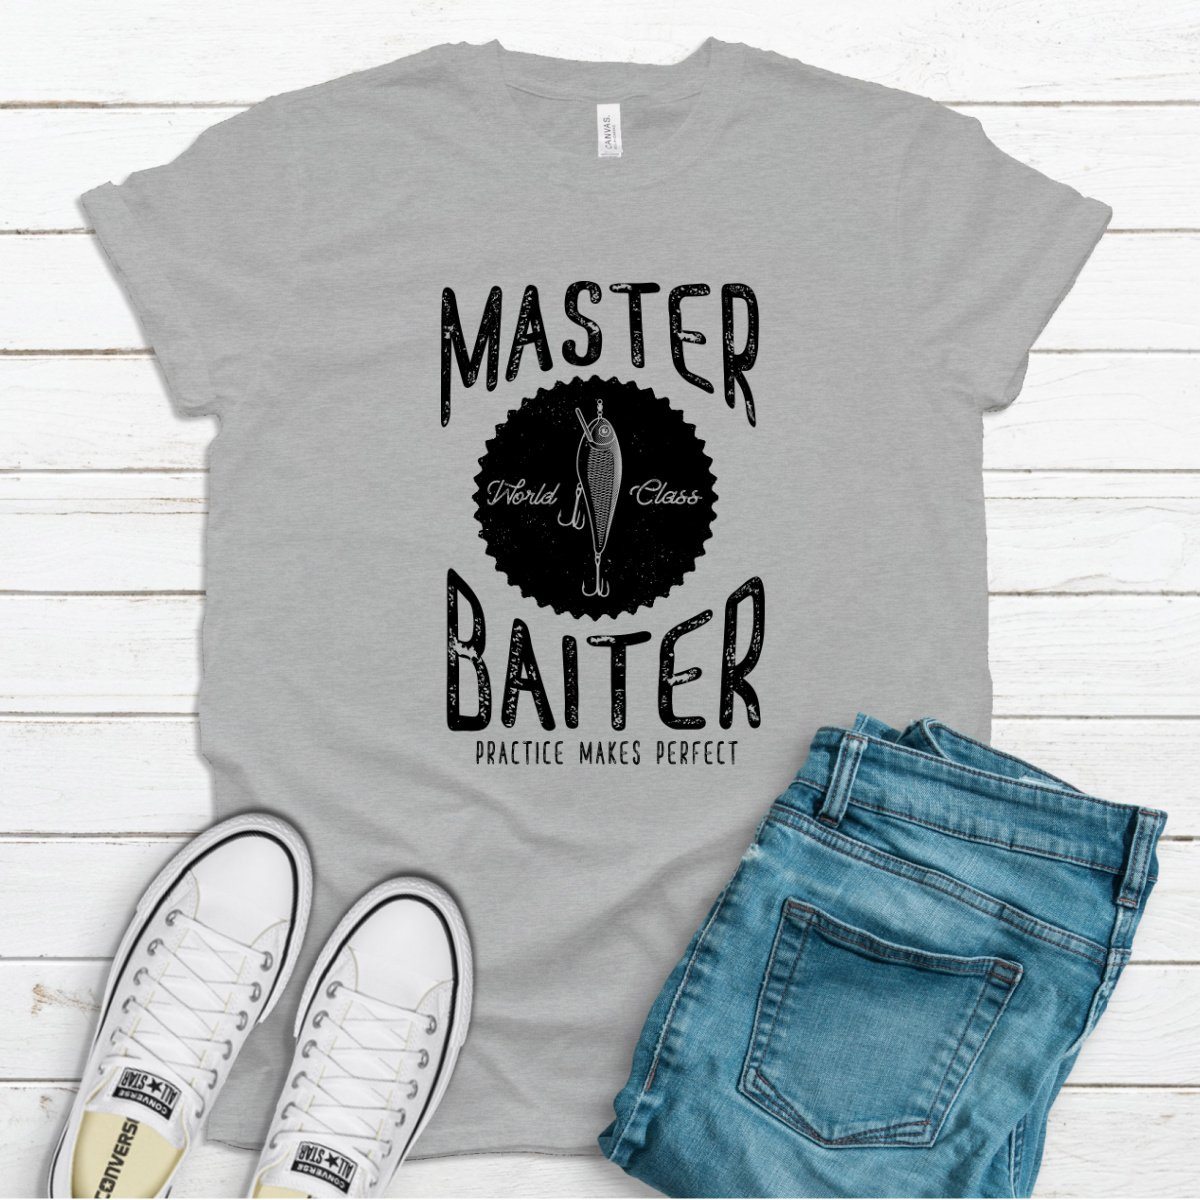 Master Baiter tee shirt Adult Tee Shirt The Teal Bandit 